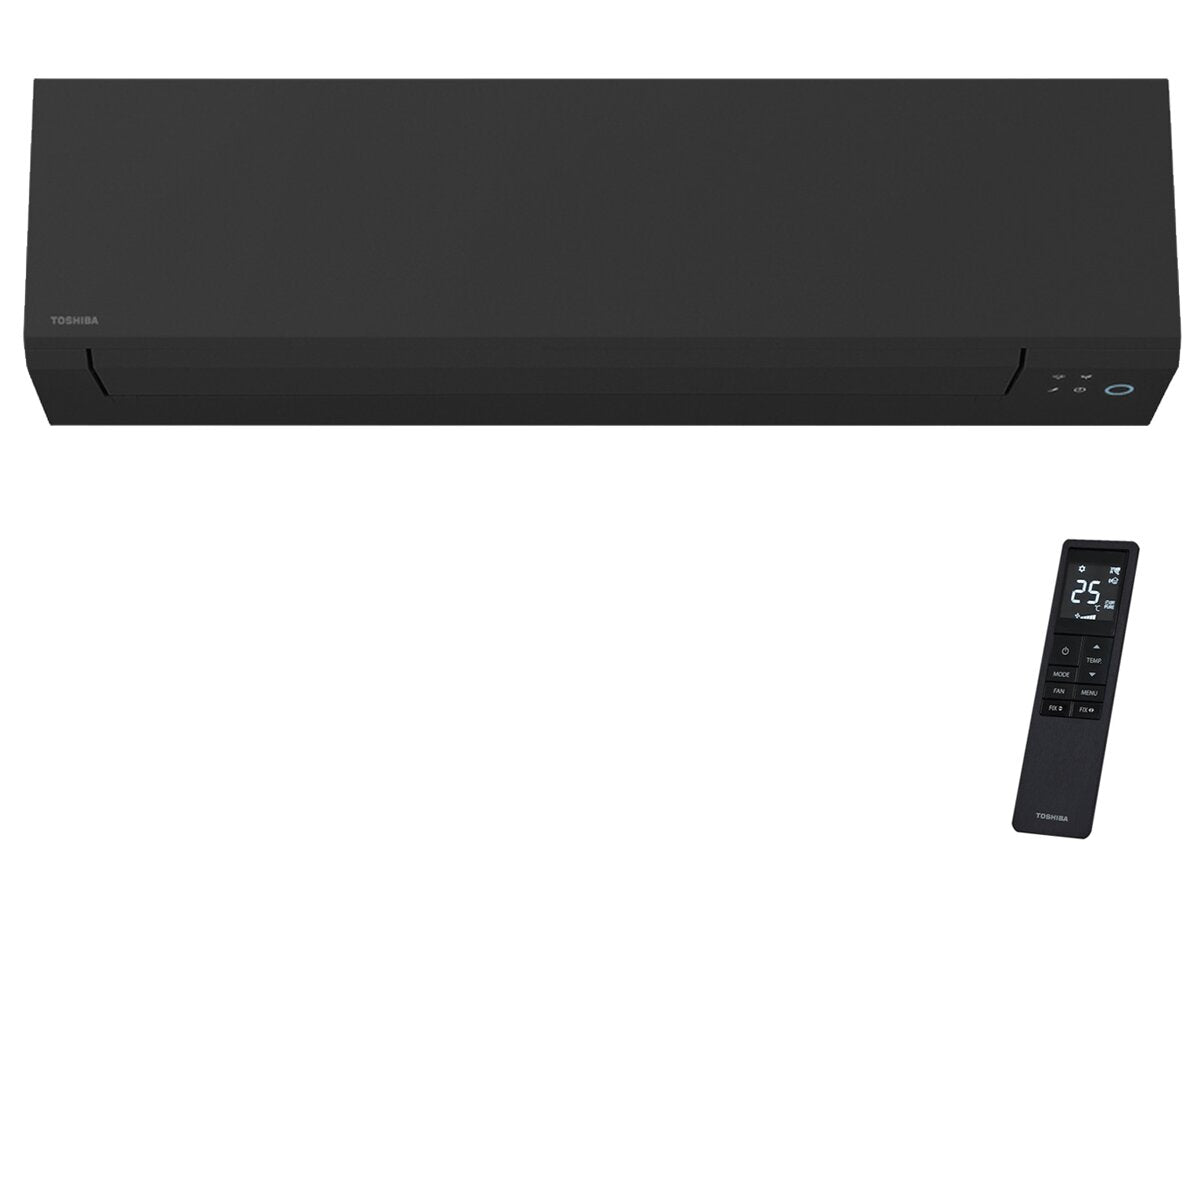 Toshiba SHORAI Edge Black 7000 BTU R32 Inverter Air Conditioner A+++ WiFi